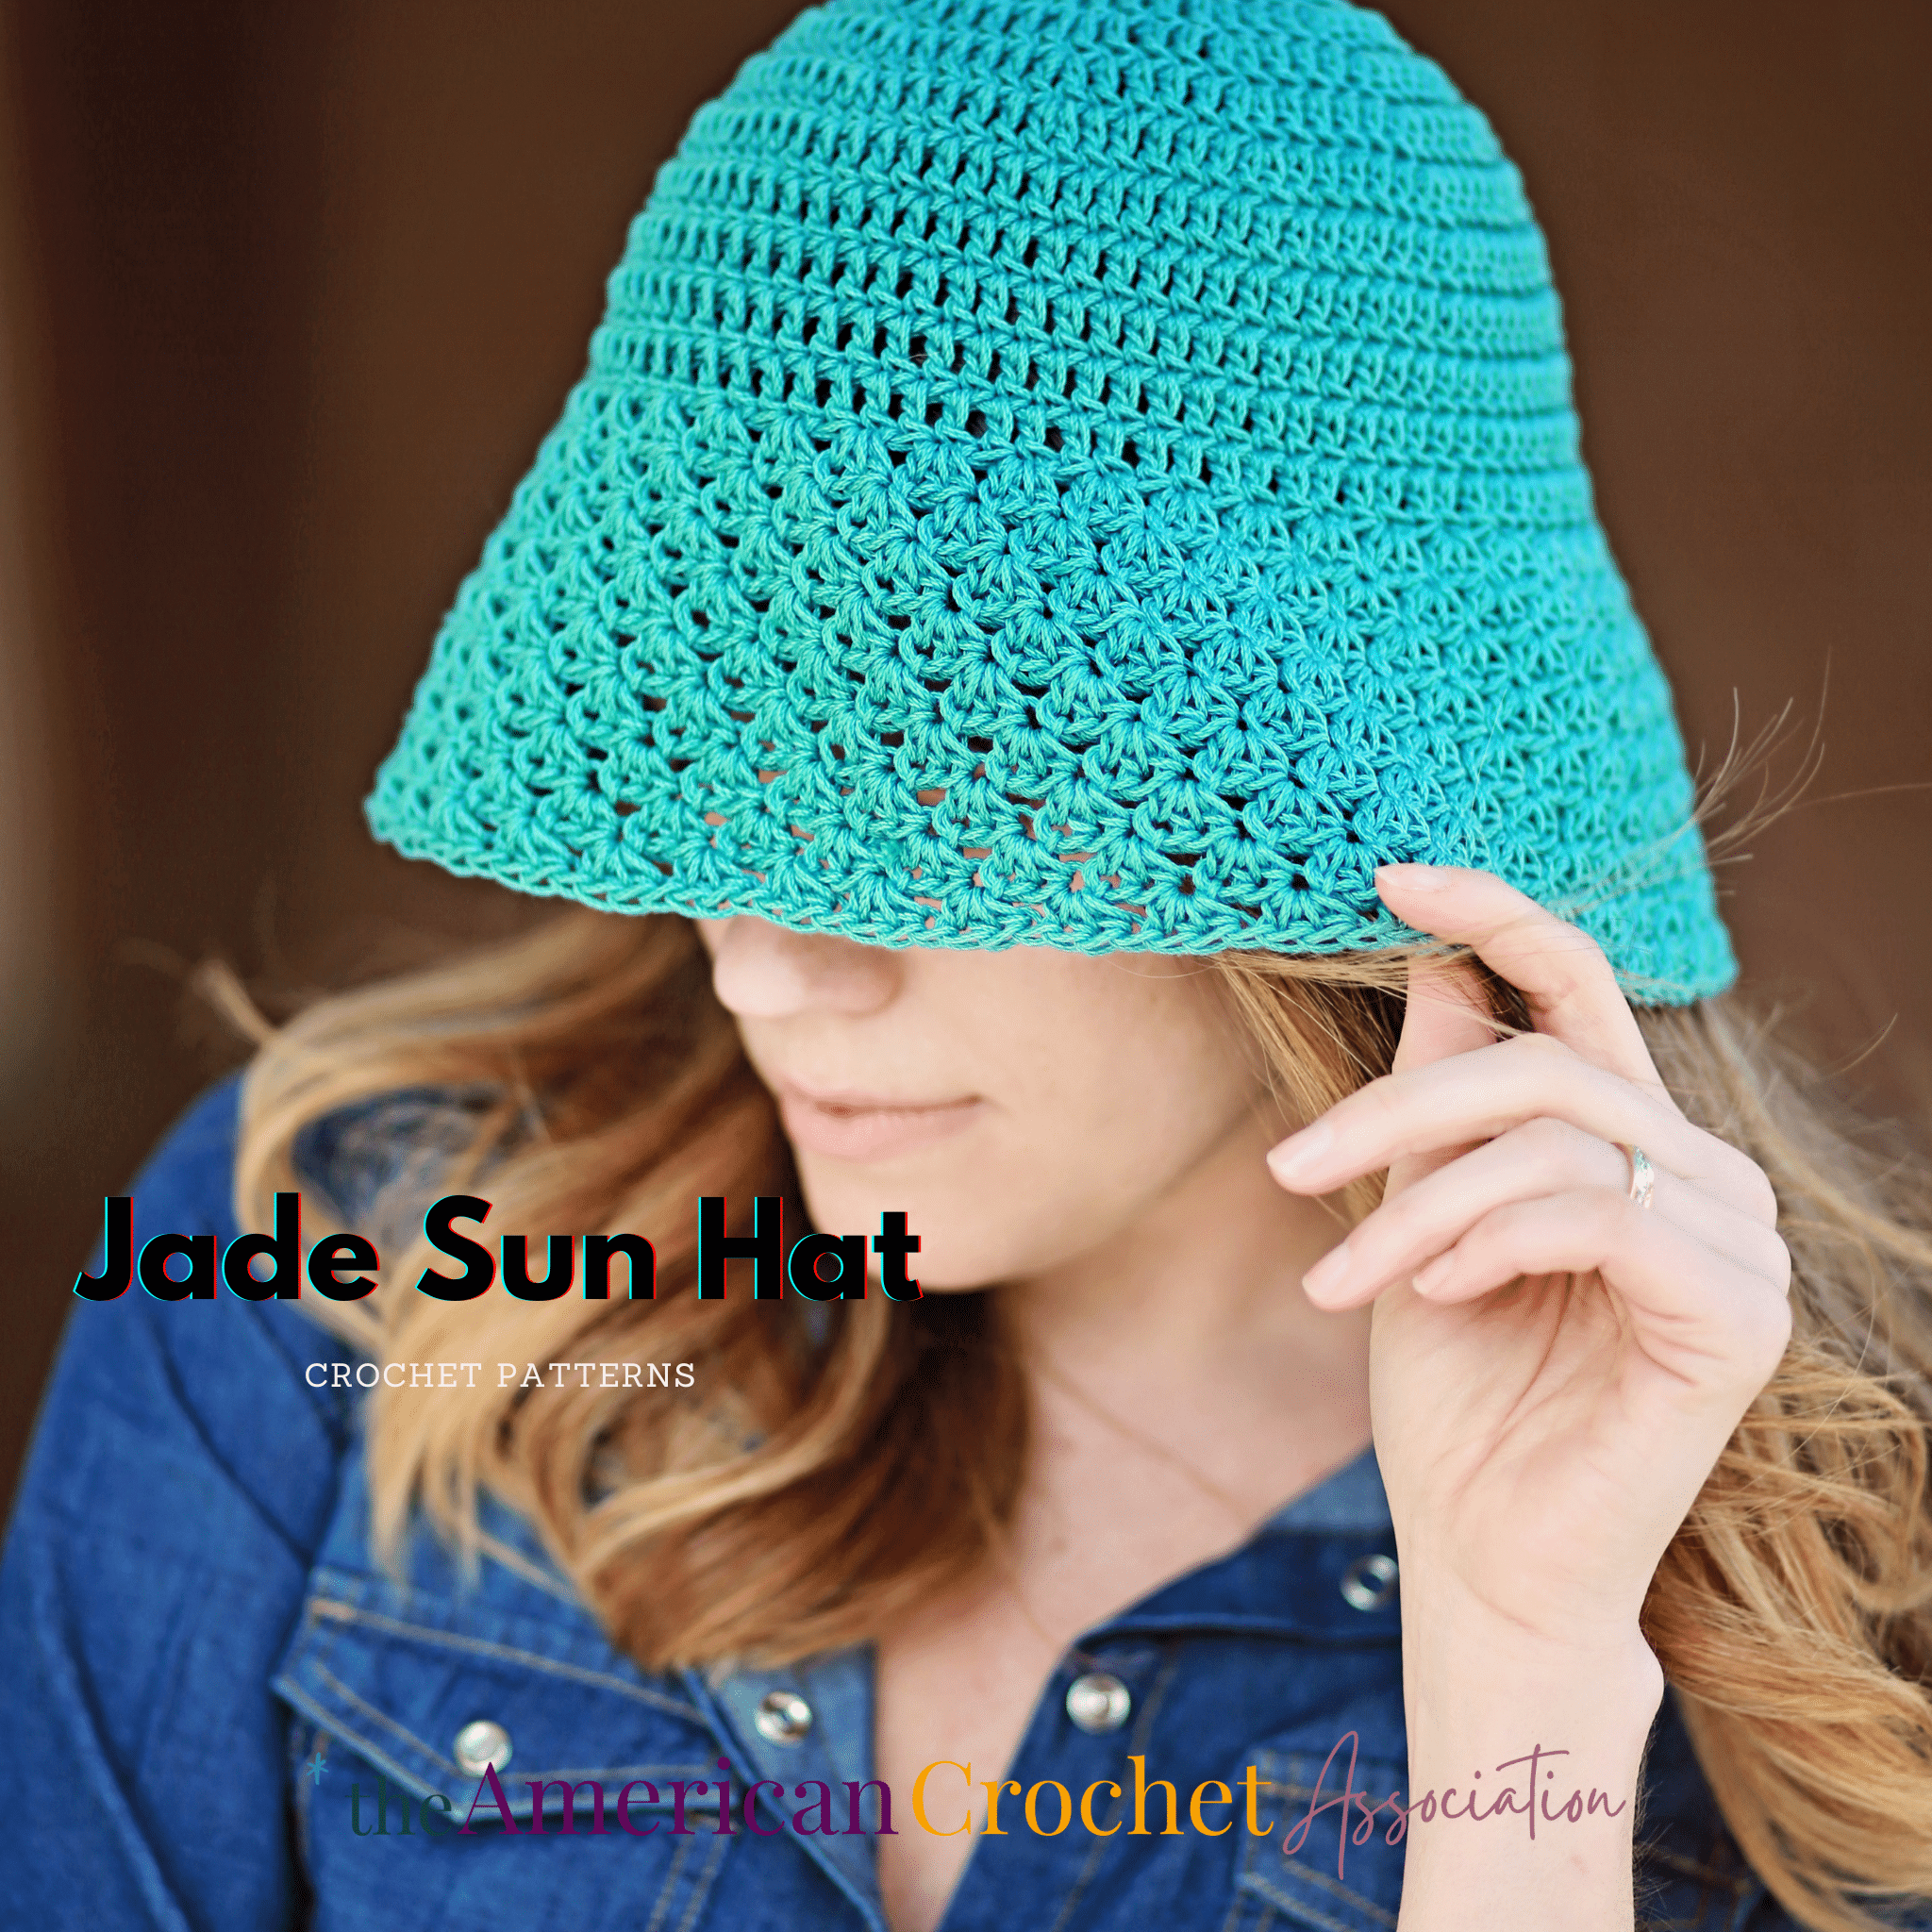 Jade Sun Hat Crochet Pattern Full - American Crochet Association